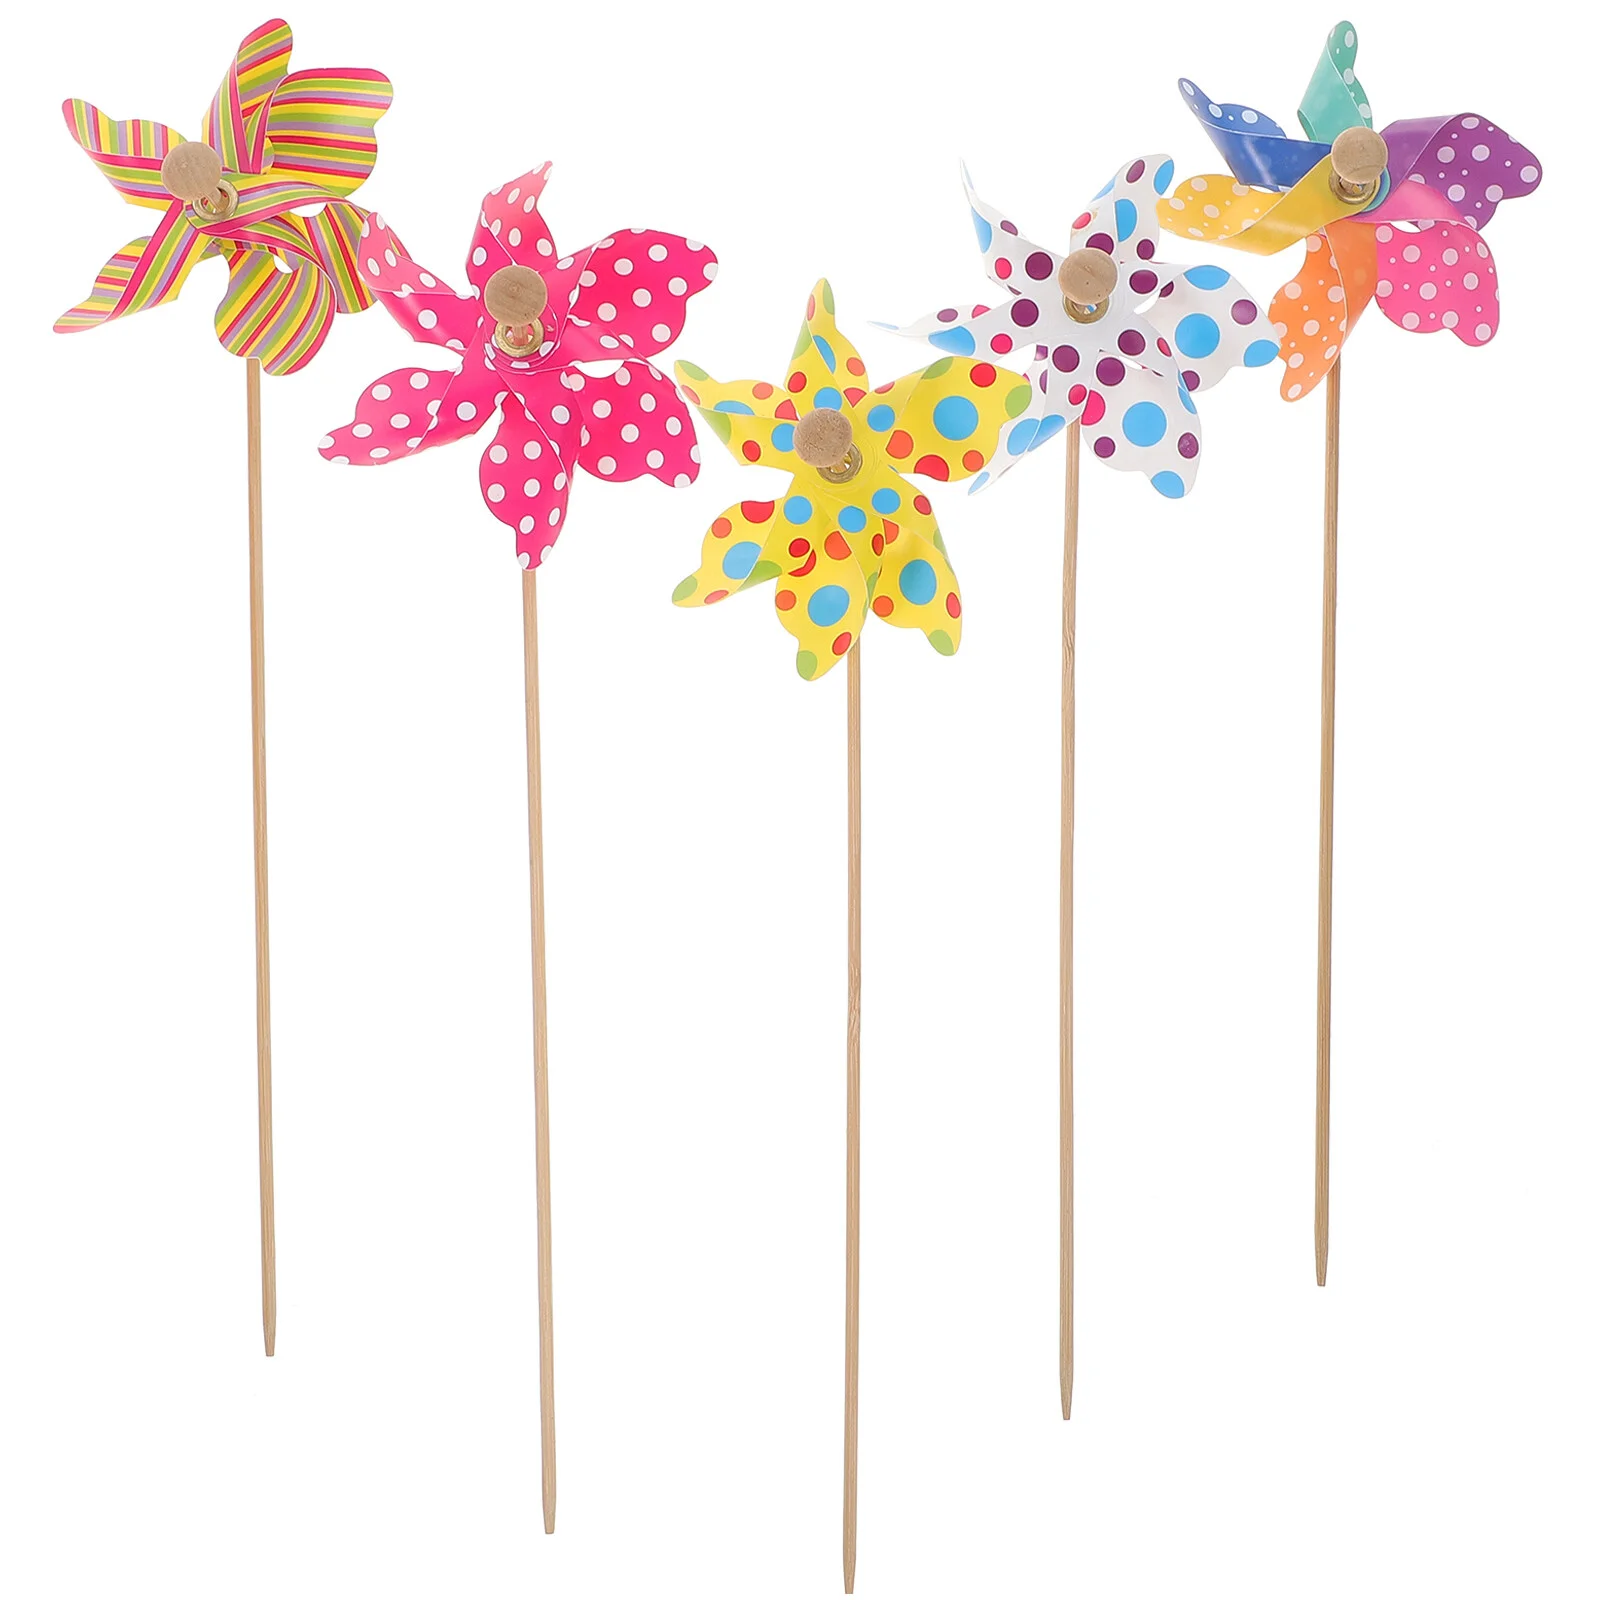 

12pcs Adorable Dots Stripe Pattern Pinwheel Handhold Hexagonal Windmill Colorful Toy for Kids (Random Color)